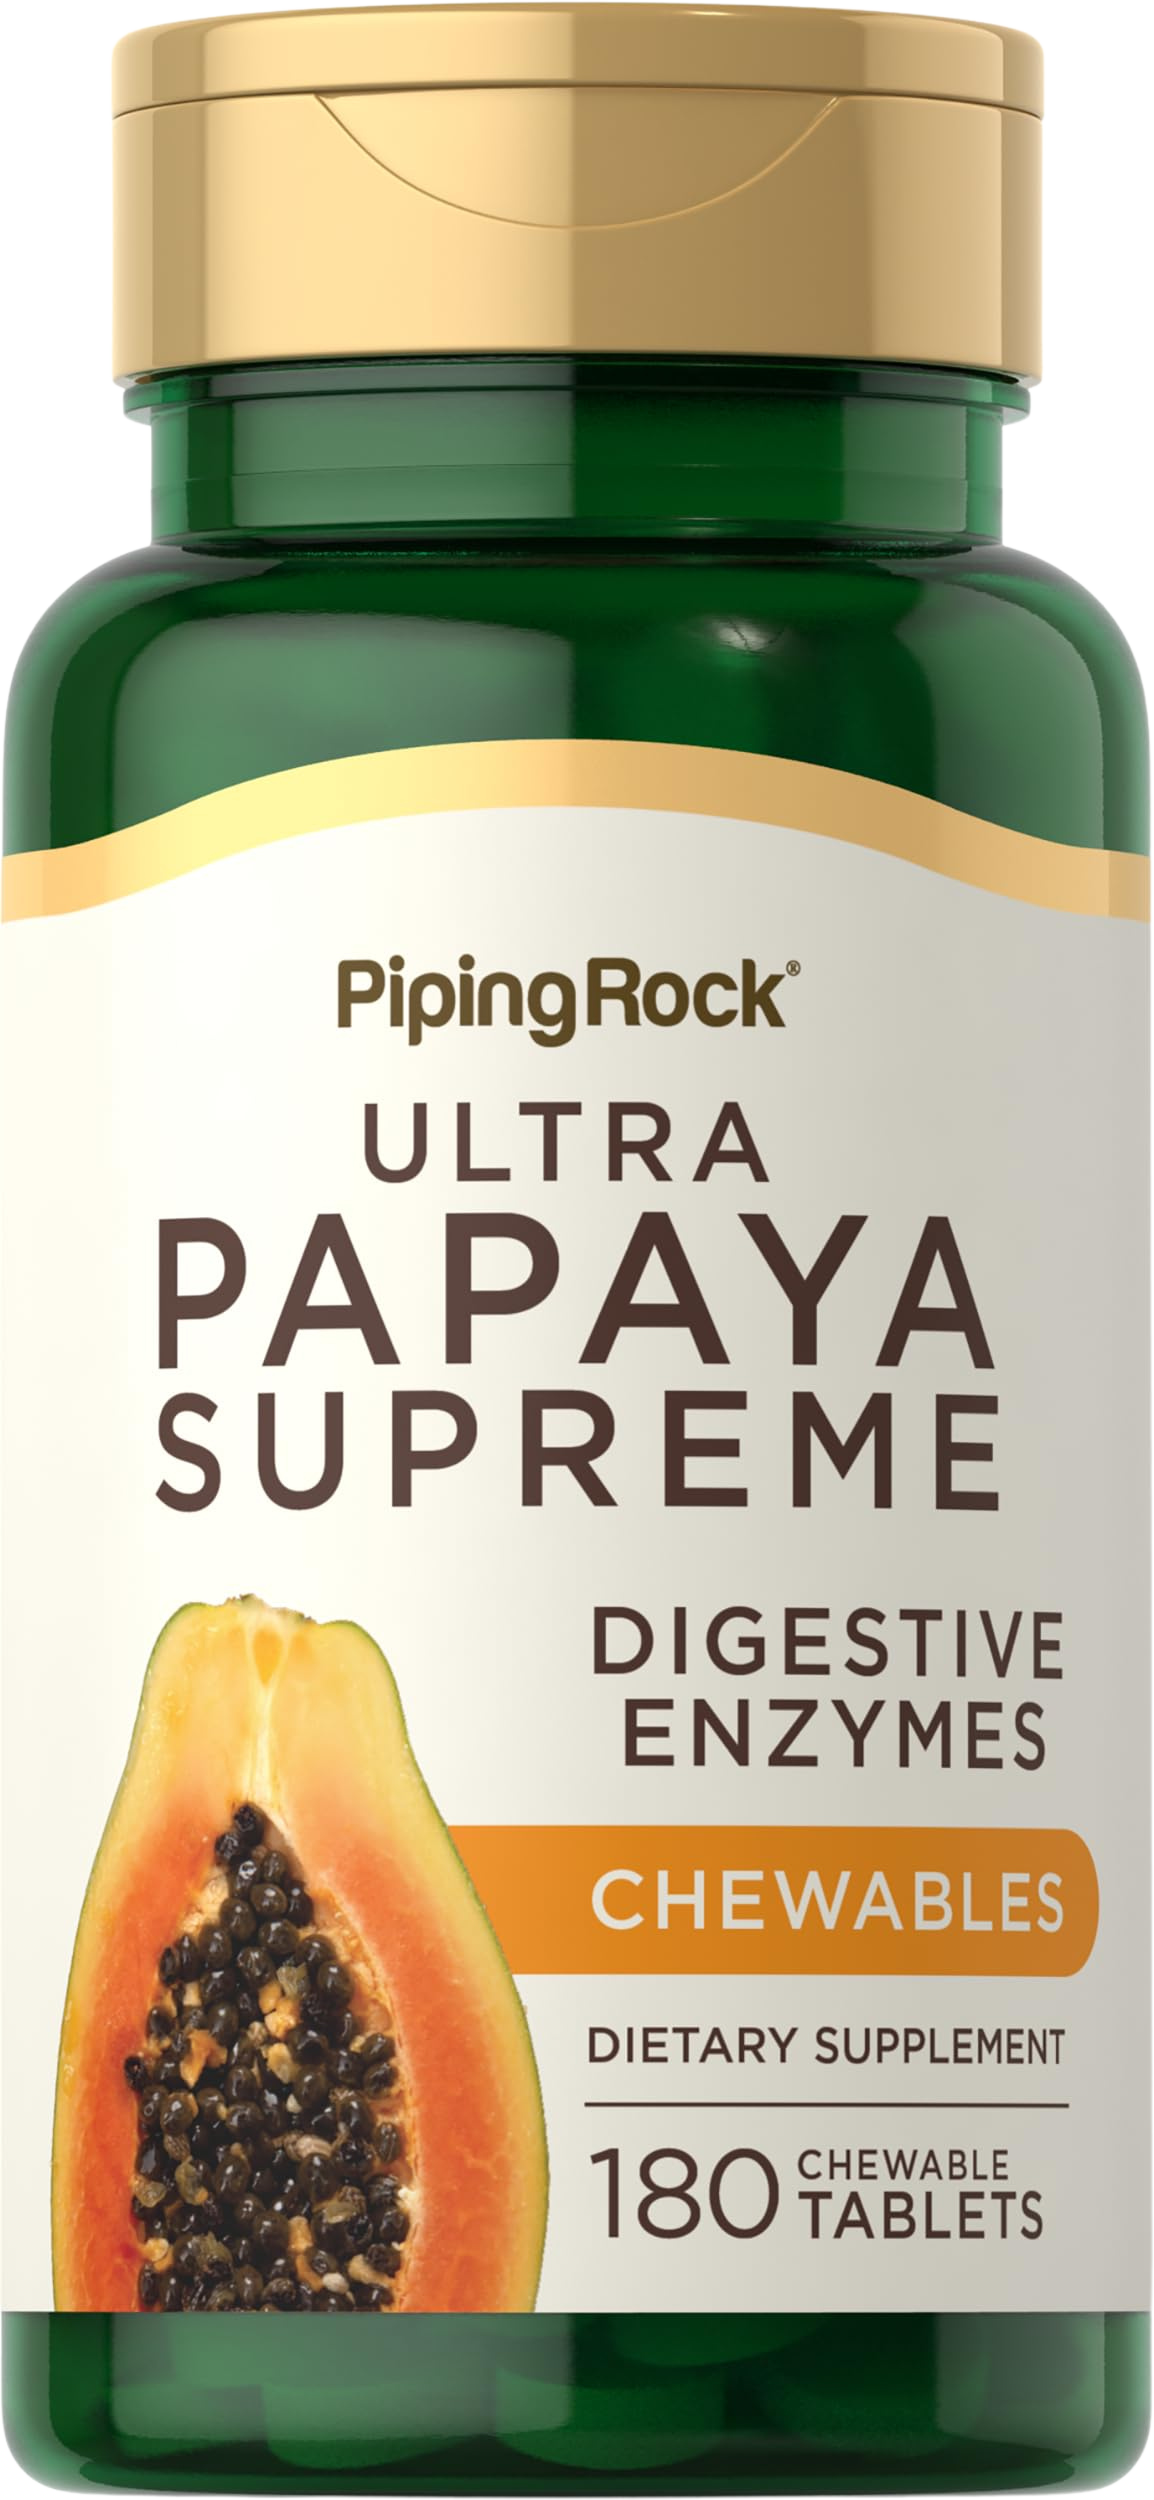 Piping Rock Papaya Enzymes Chewable